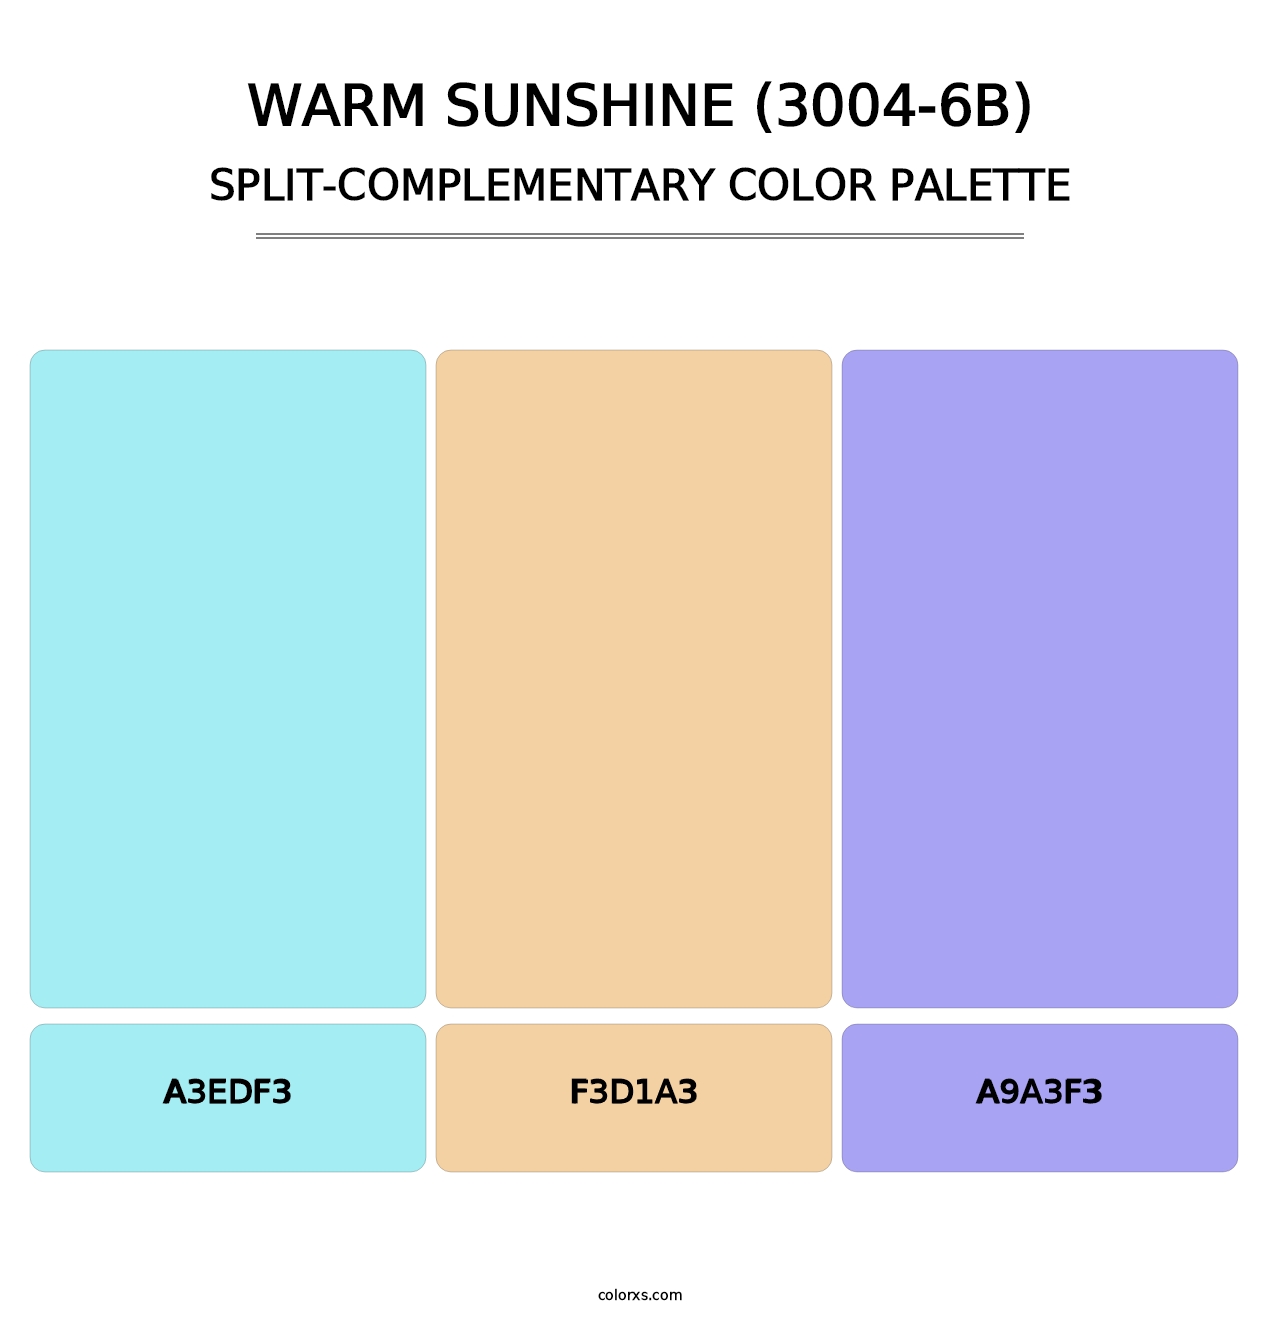 Warm Sunshine (3004-6B) - Split-Complementary Color Palette